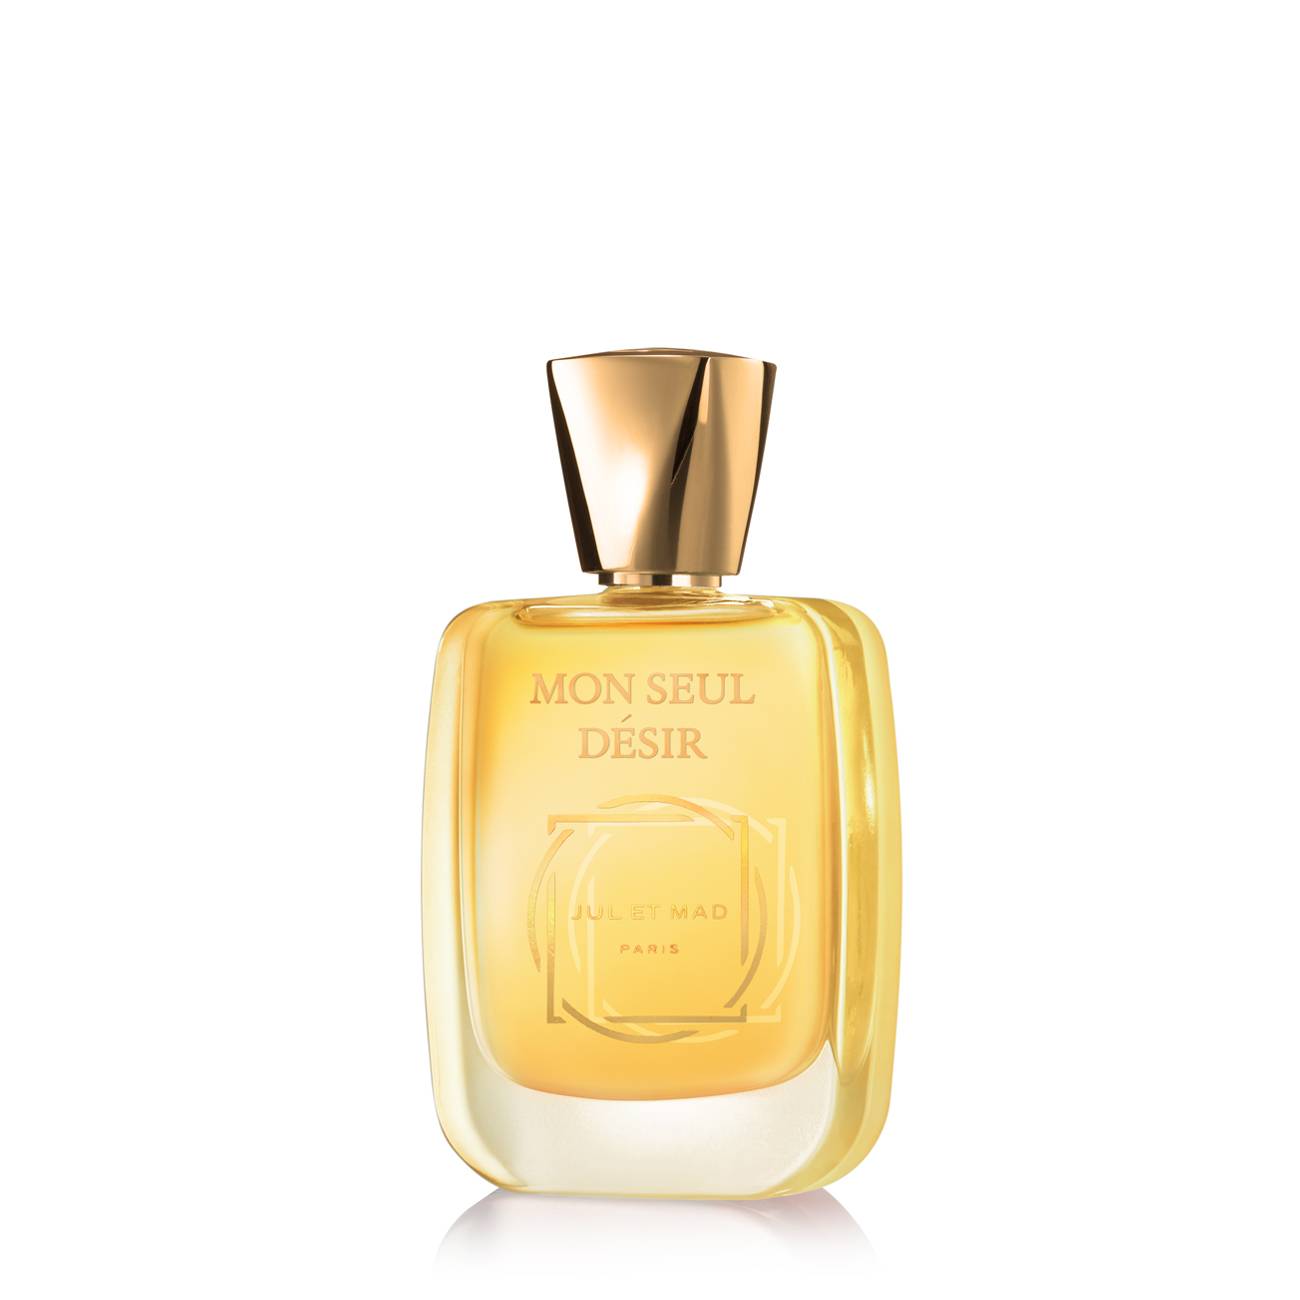 Parfum de niche Jul et Mad MON SEUL DESIR 50ml cu comanda online